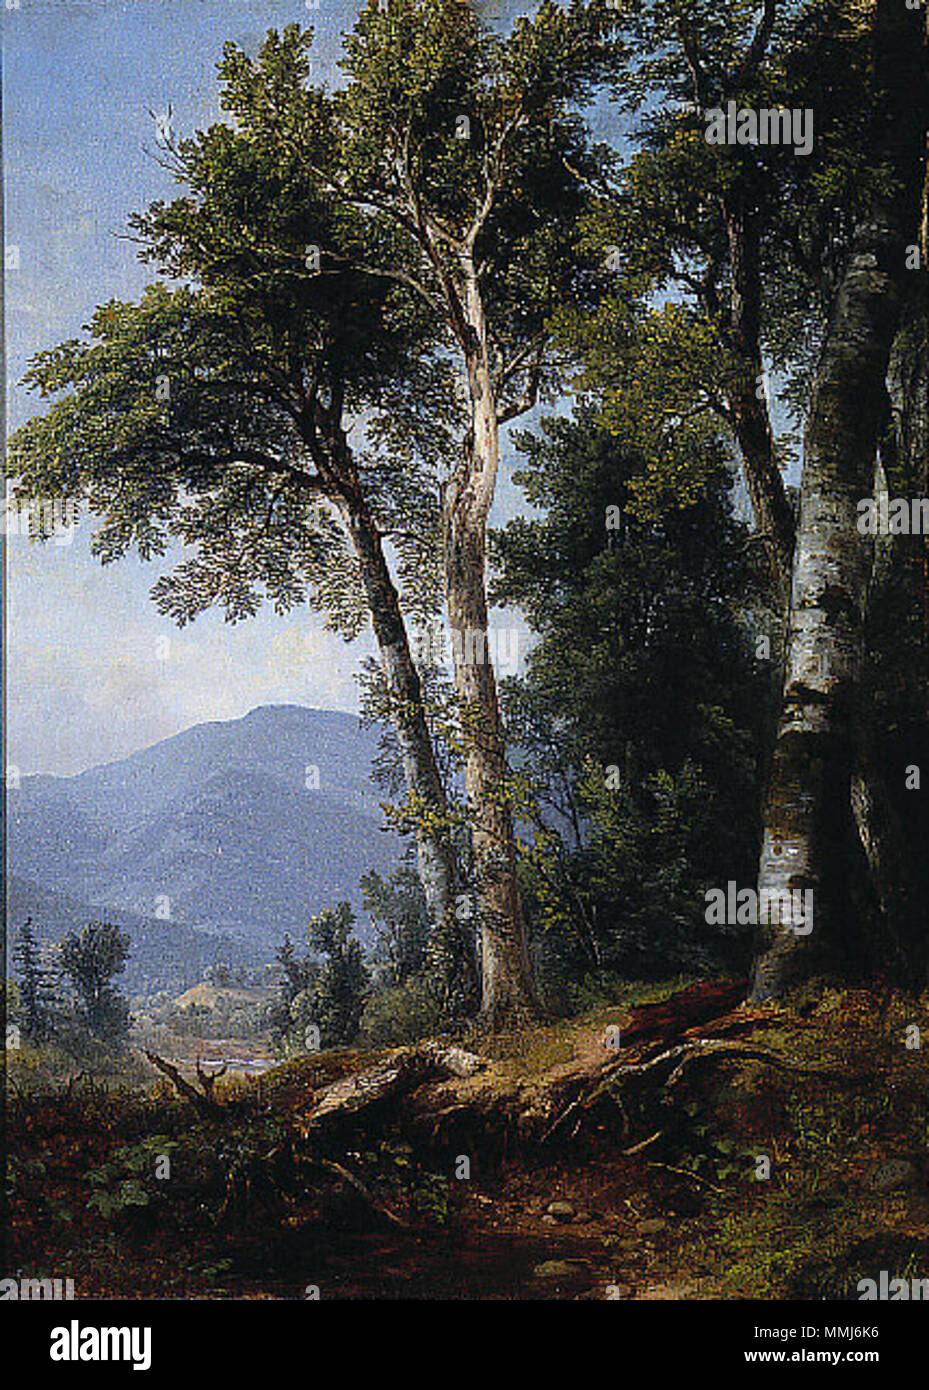 English: Woodland Landscape . circa 1850. Asher Brown Durand - Woodland Landscape Stock Photo